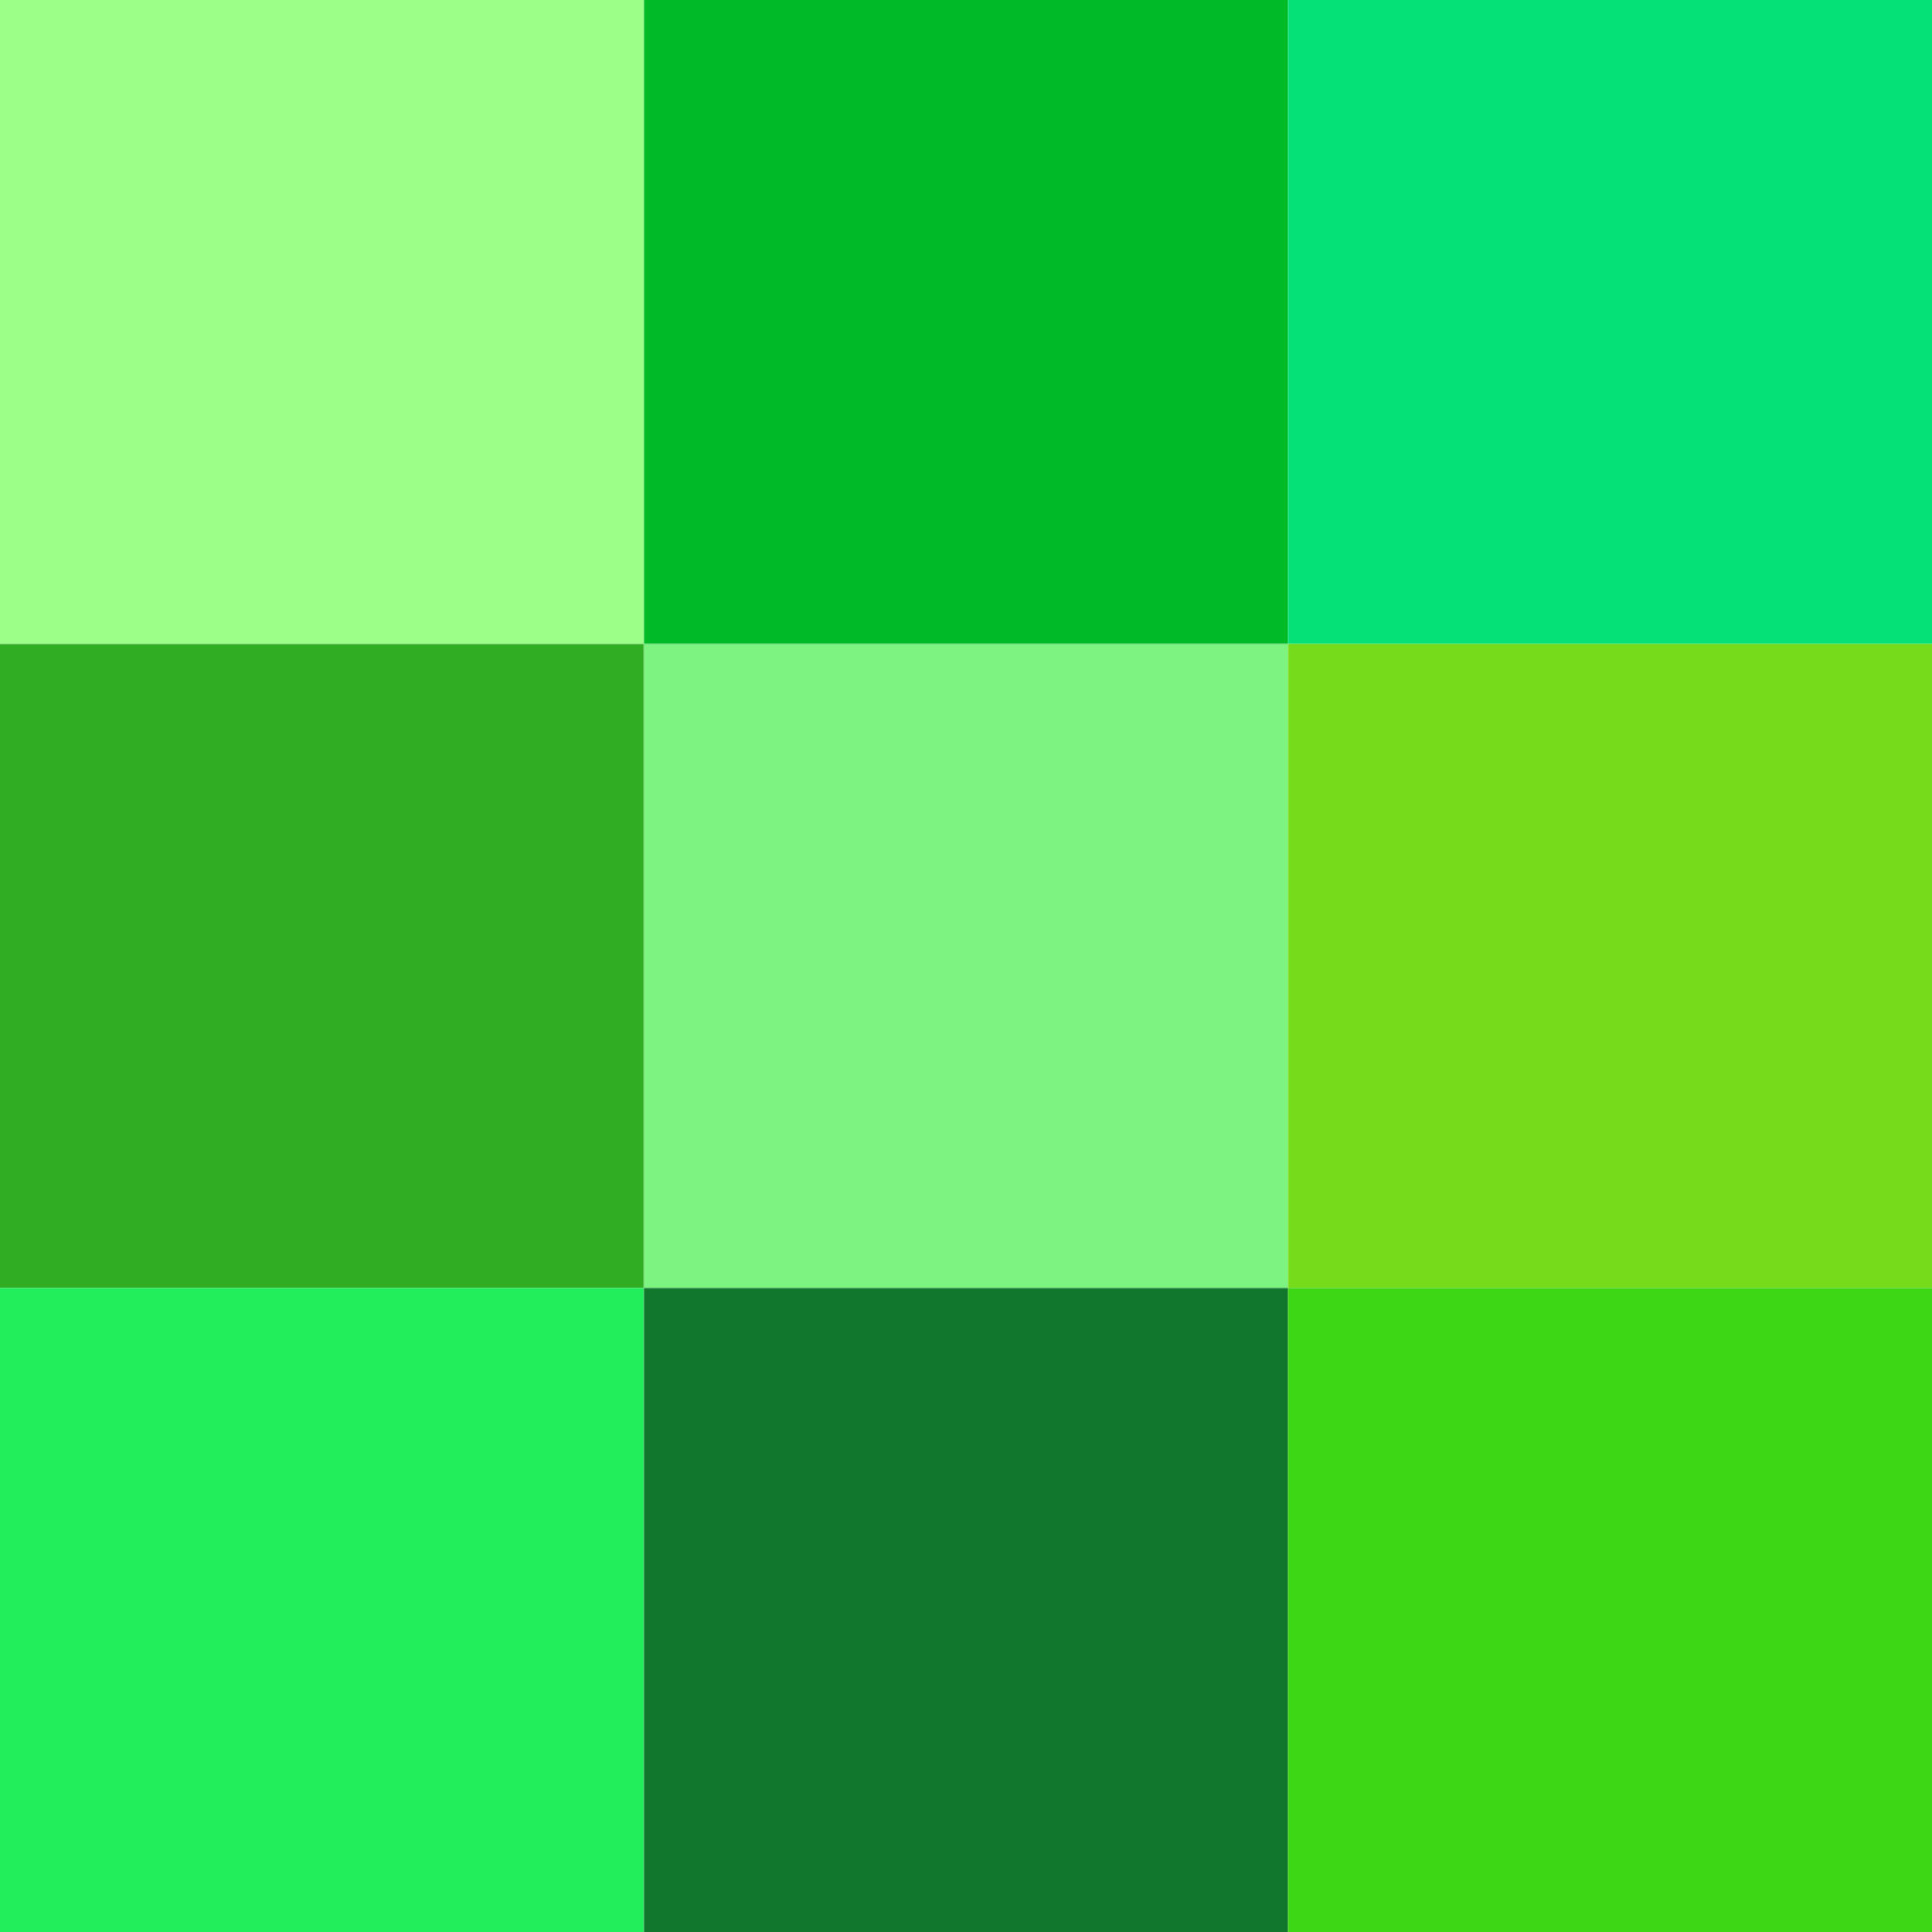 Shades of green   Wikipedia